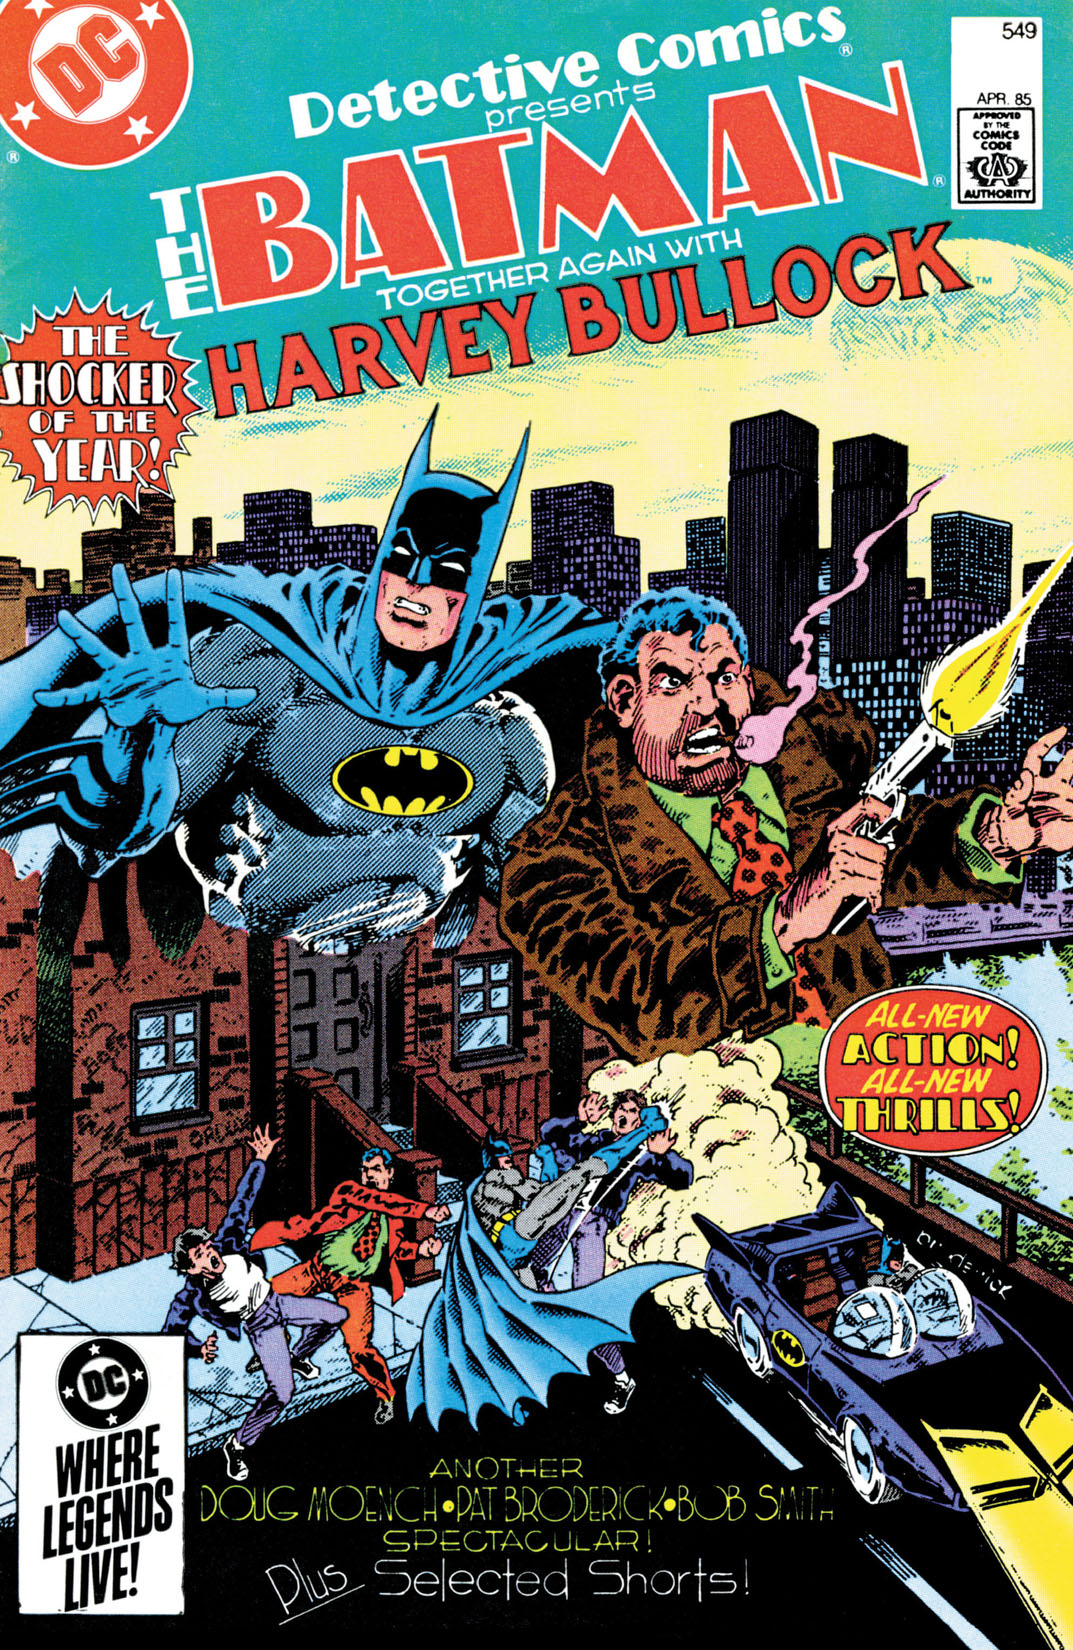 Detective Comics (1937-) #549 preview images